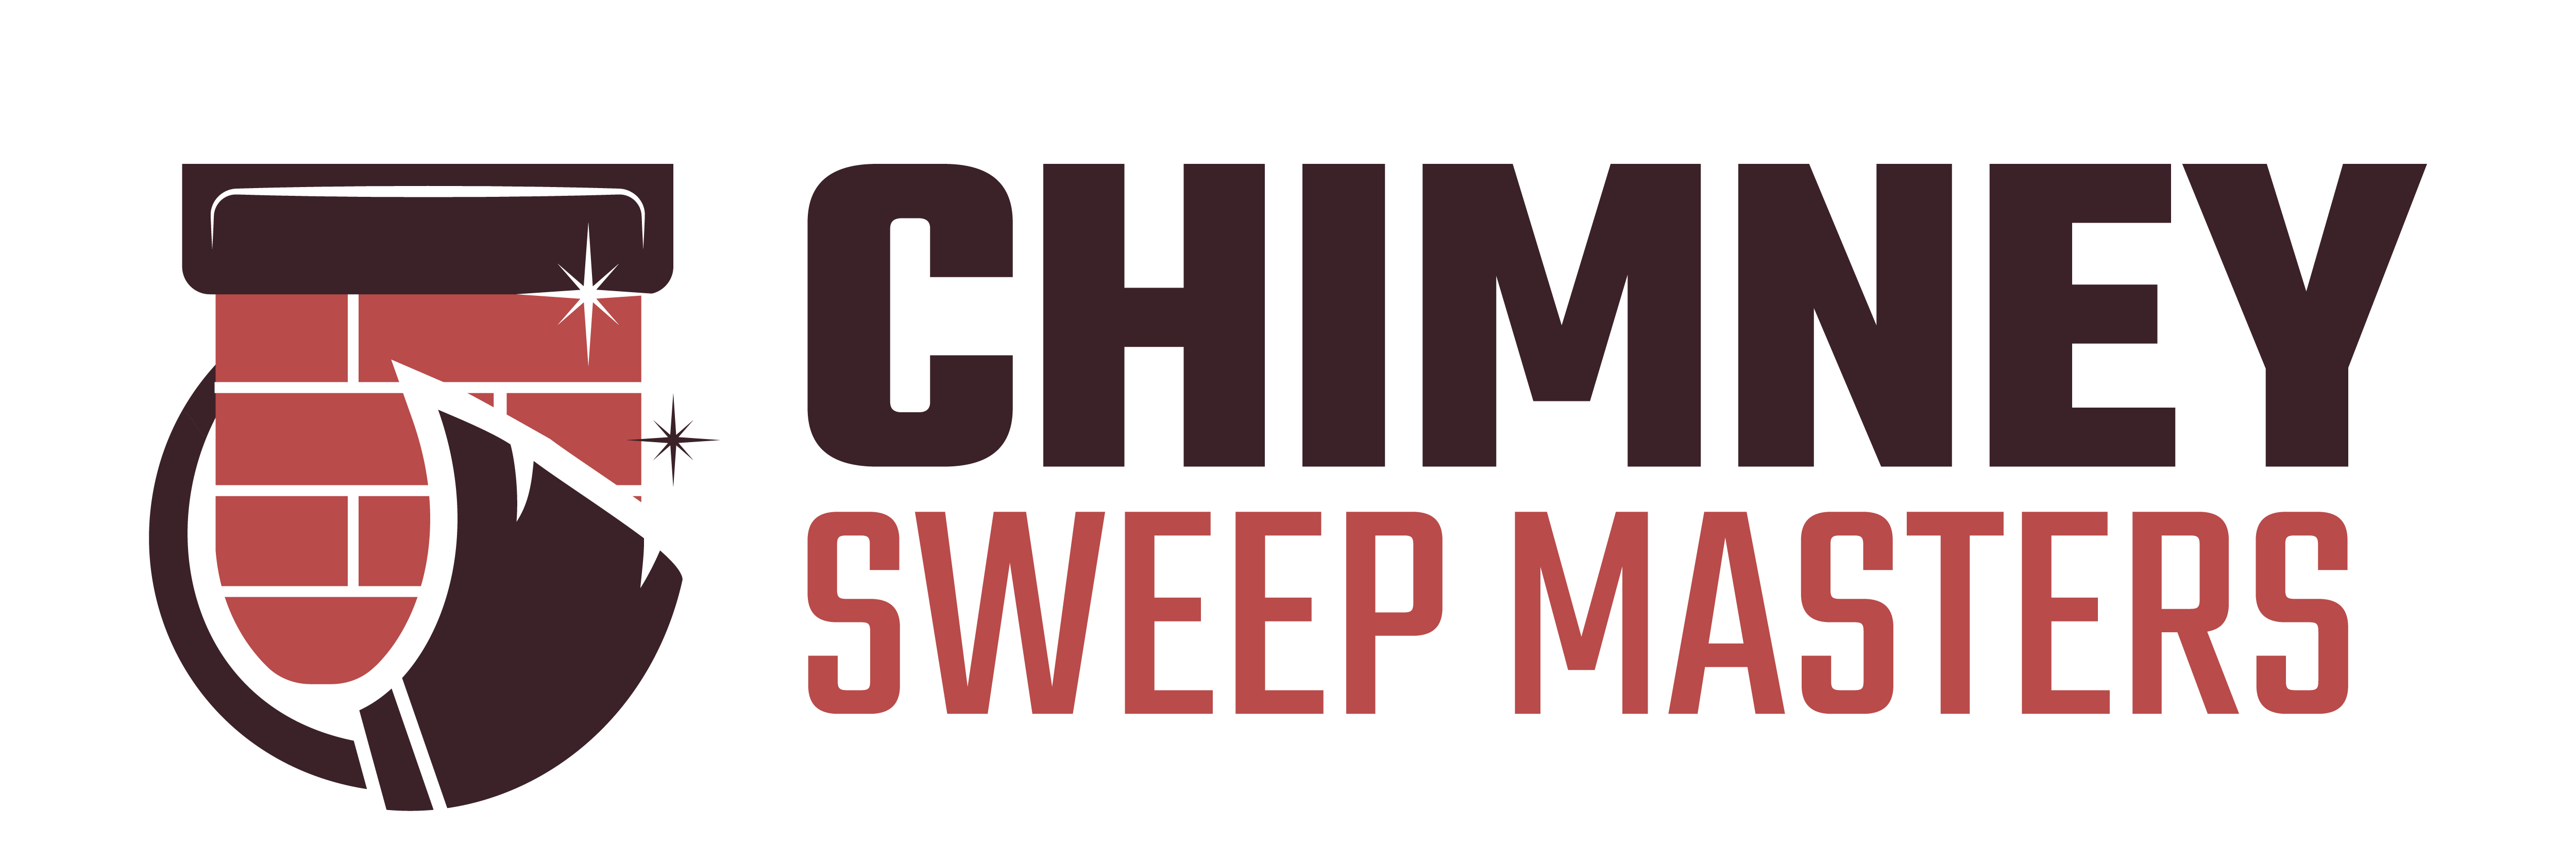 Chimney Sweep Masters Crestline Logo